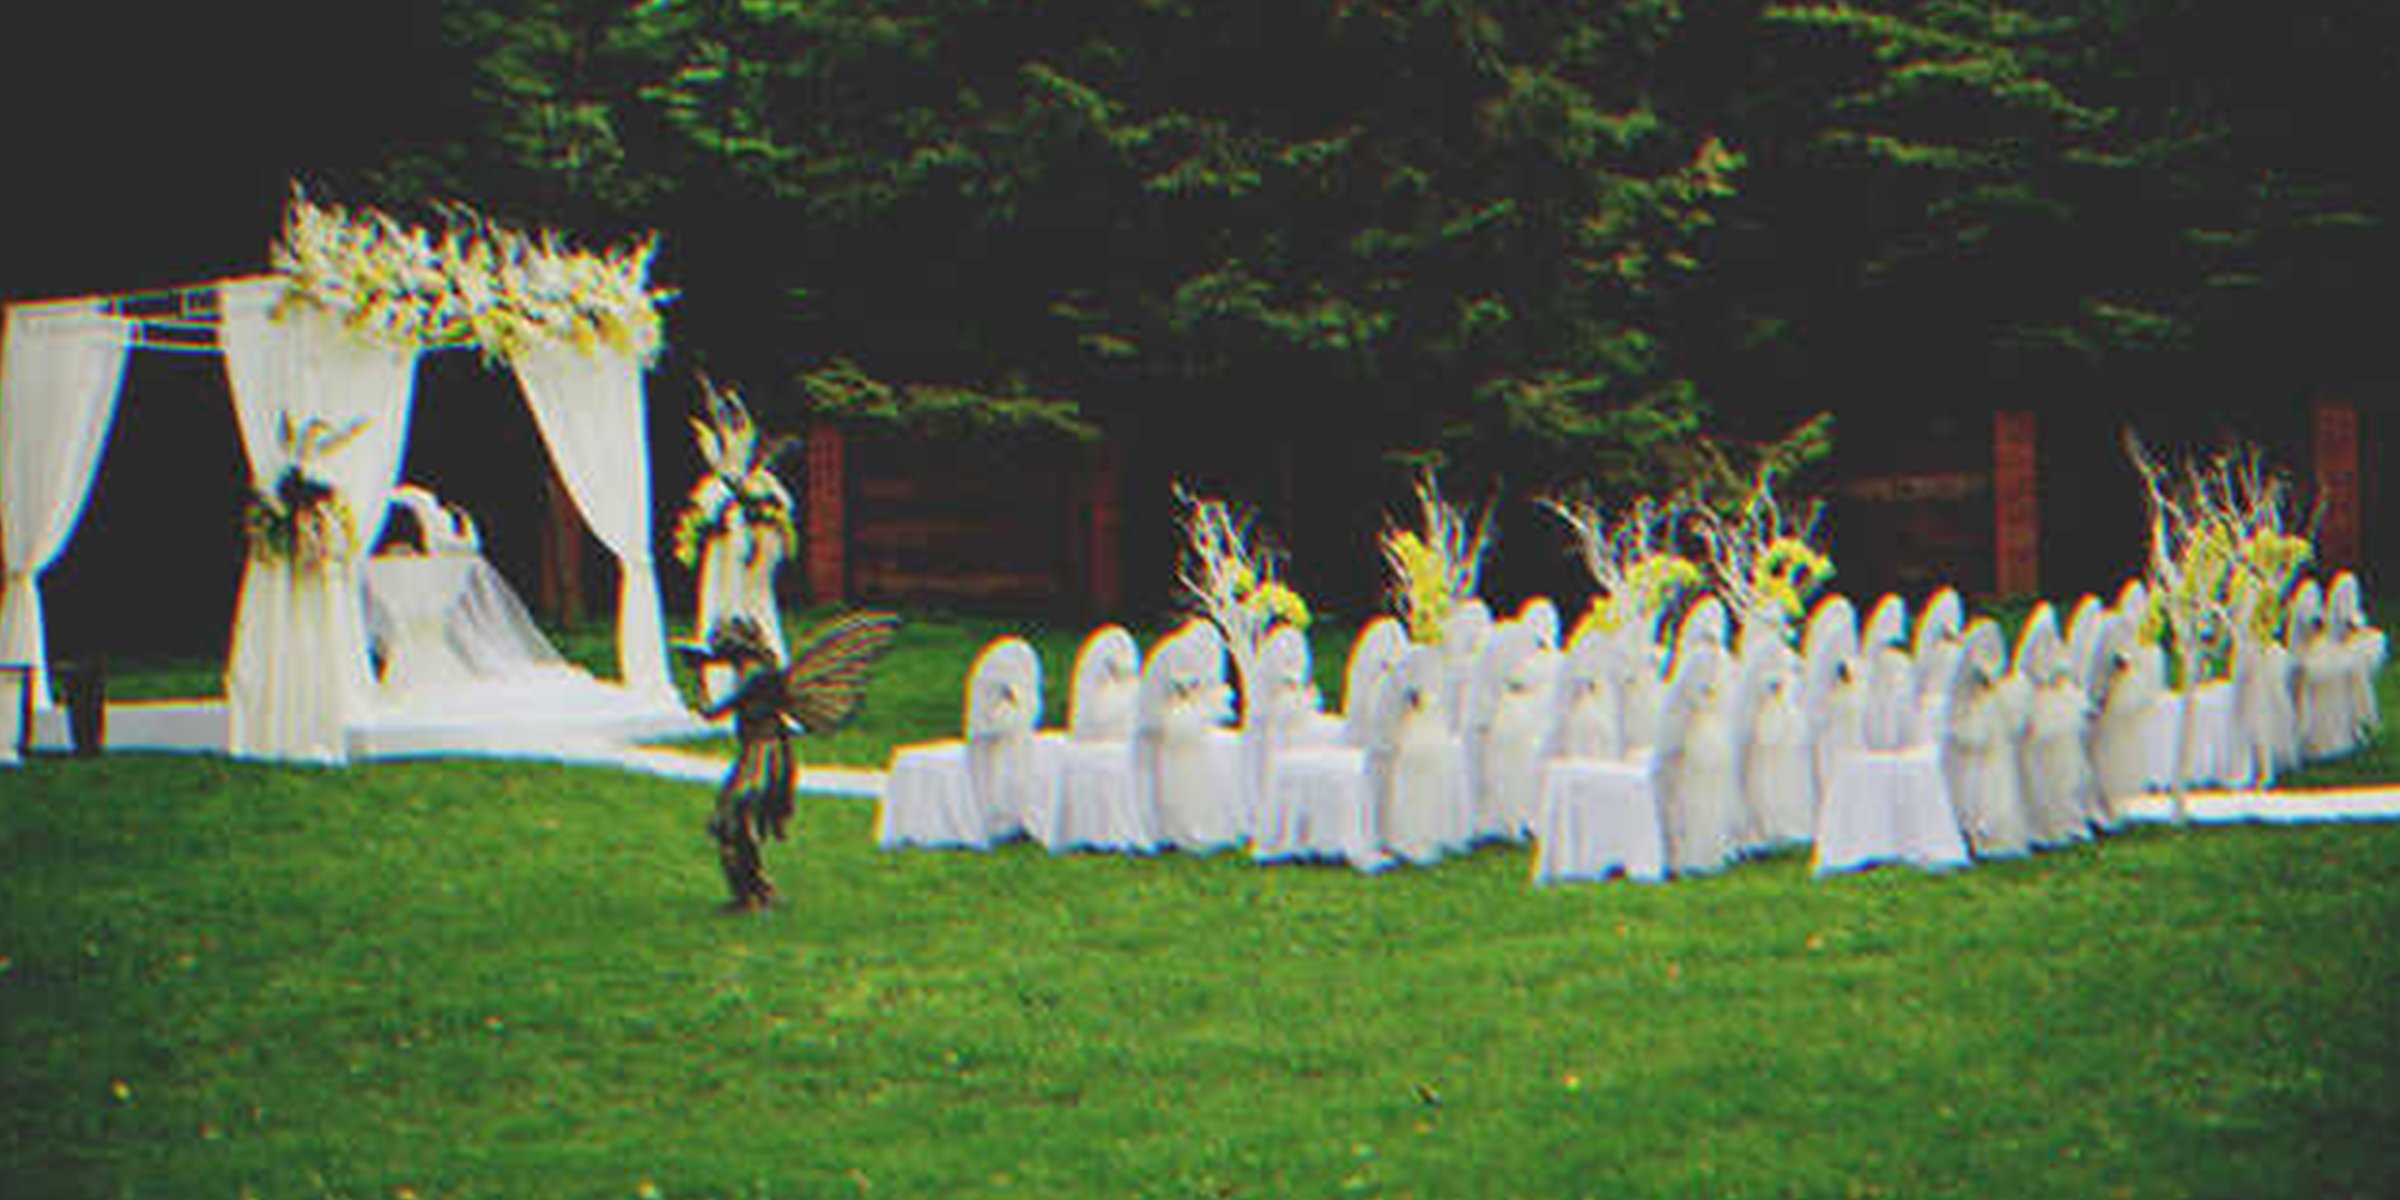 Una boda | Foto: Shutterstock